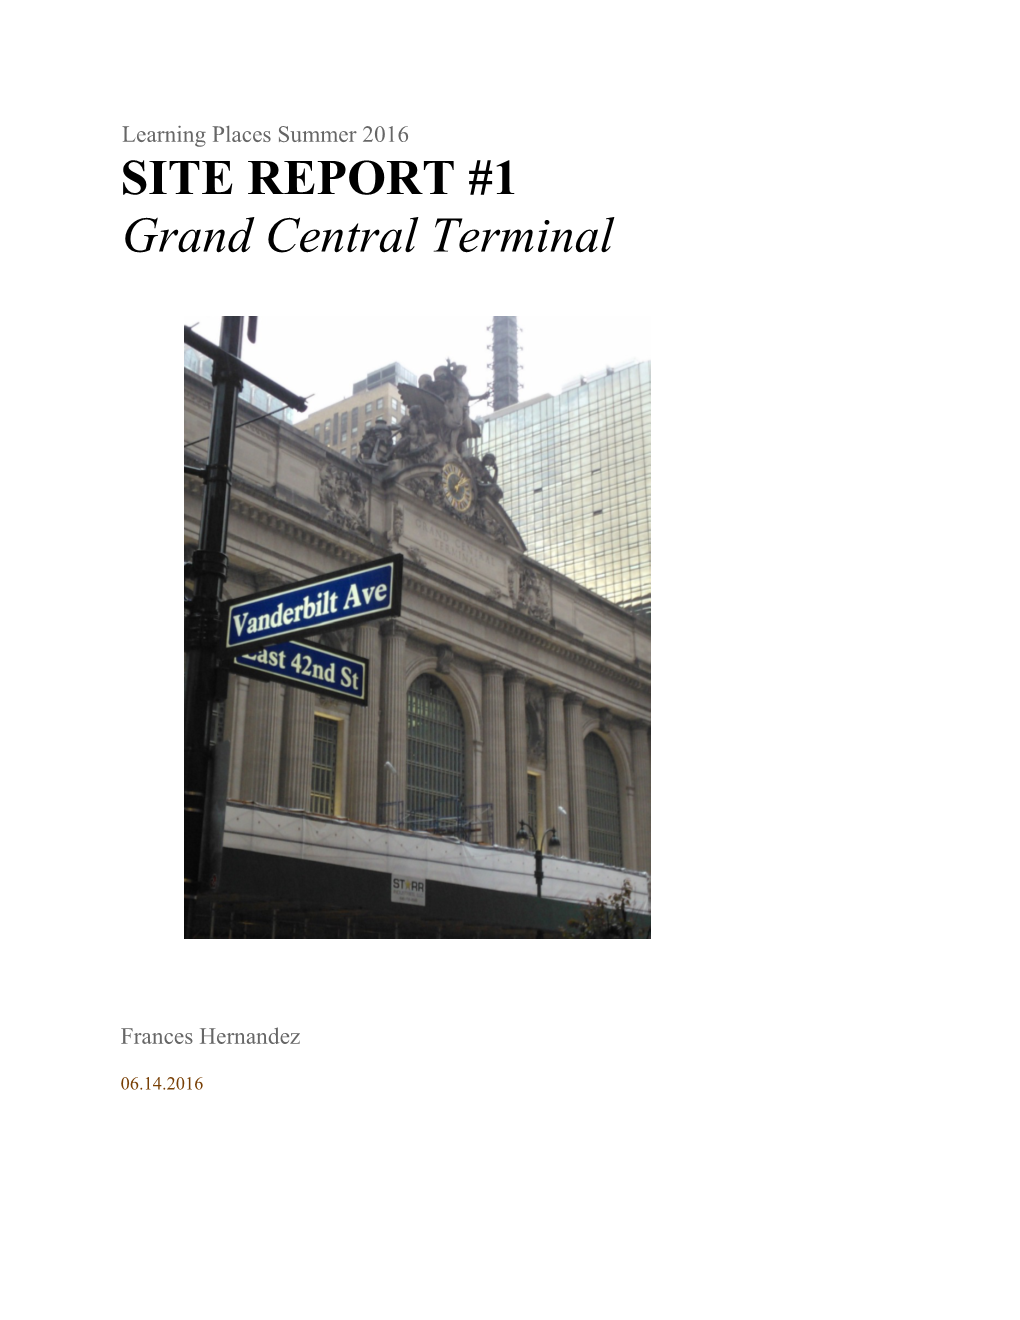 SITE REPORT #1 Grand Central Terminal